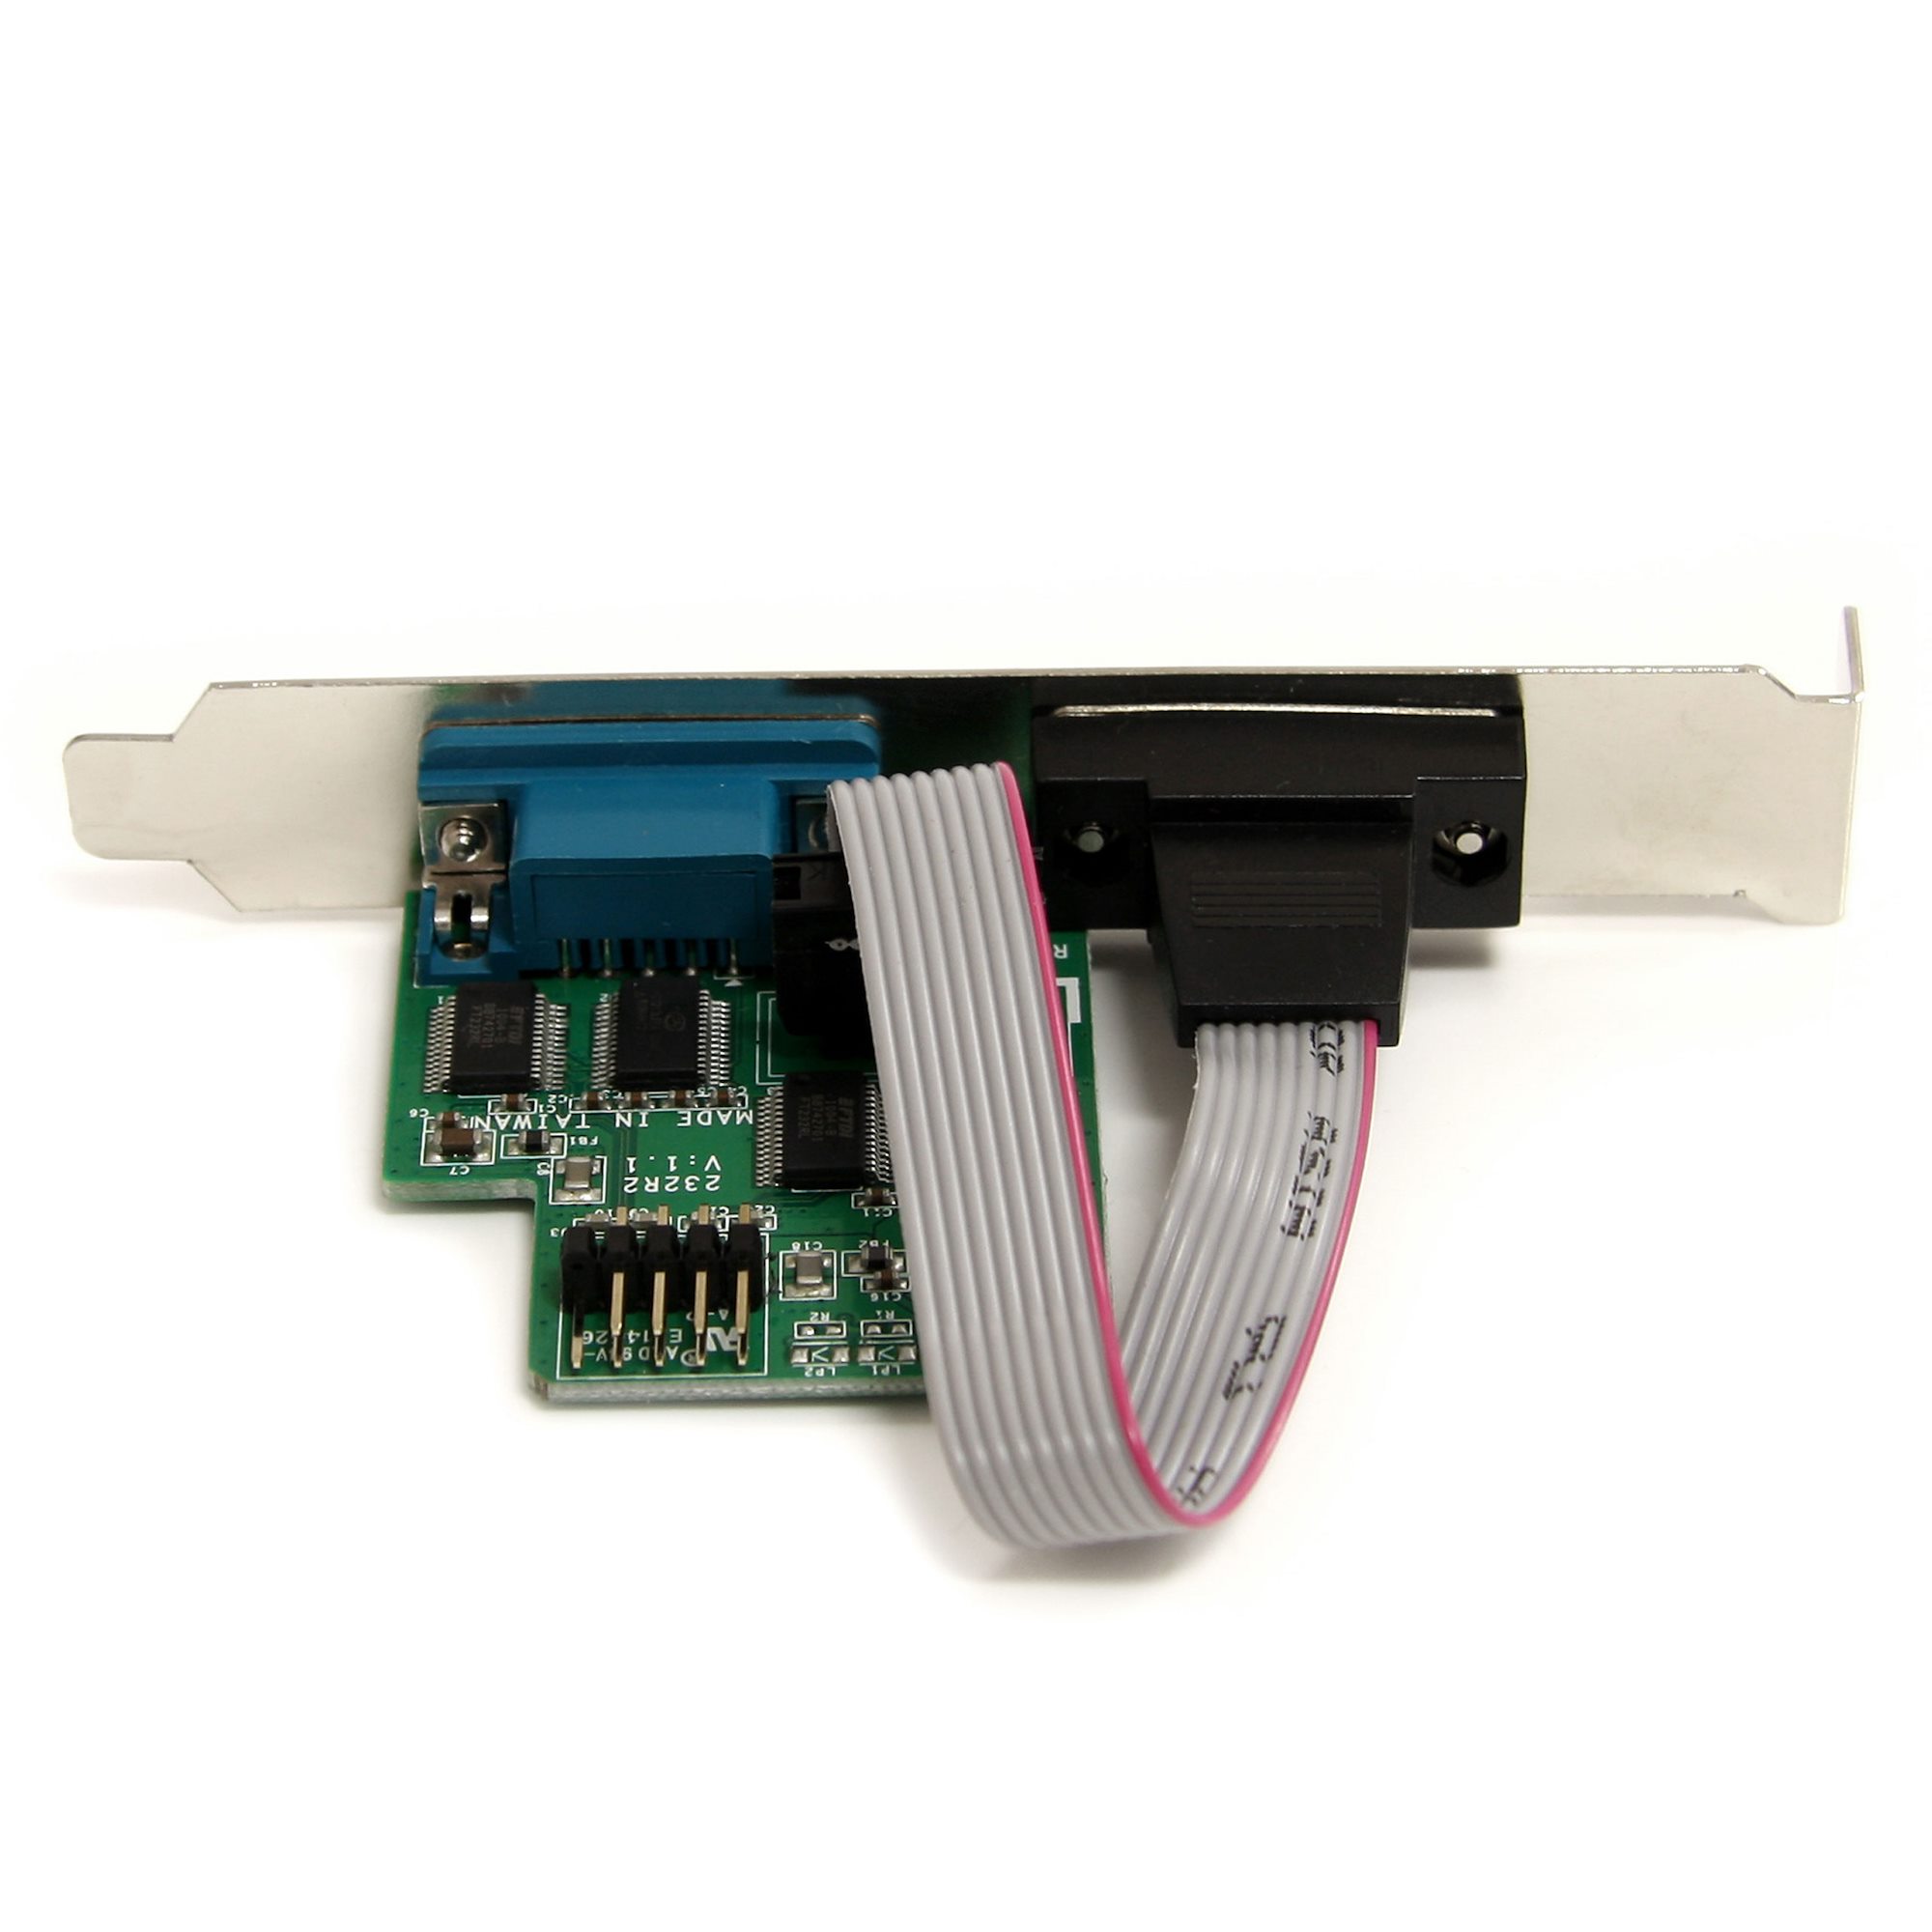 Переходник USB-rs232. Rs232 материнская плата. 2 Port USB motherboard header Adapter. Internal port